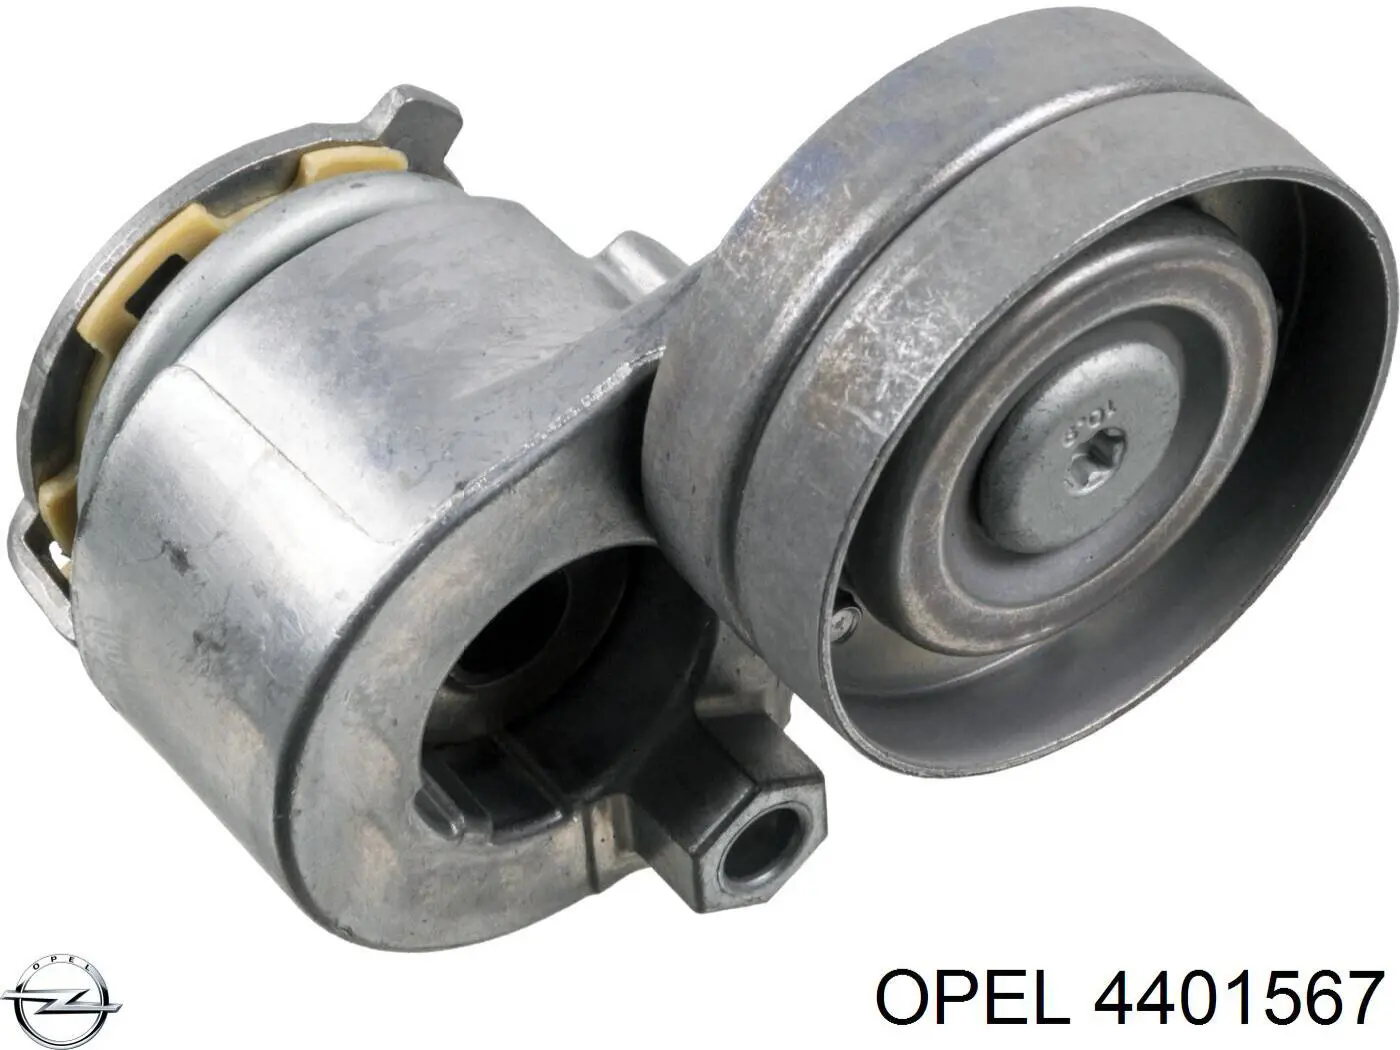 4401567 Opel tensor de correa poli v